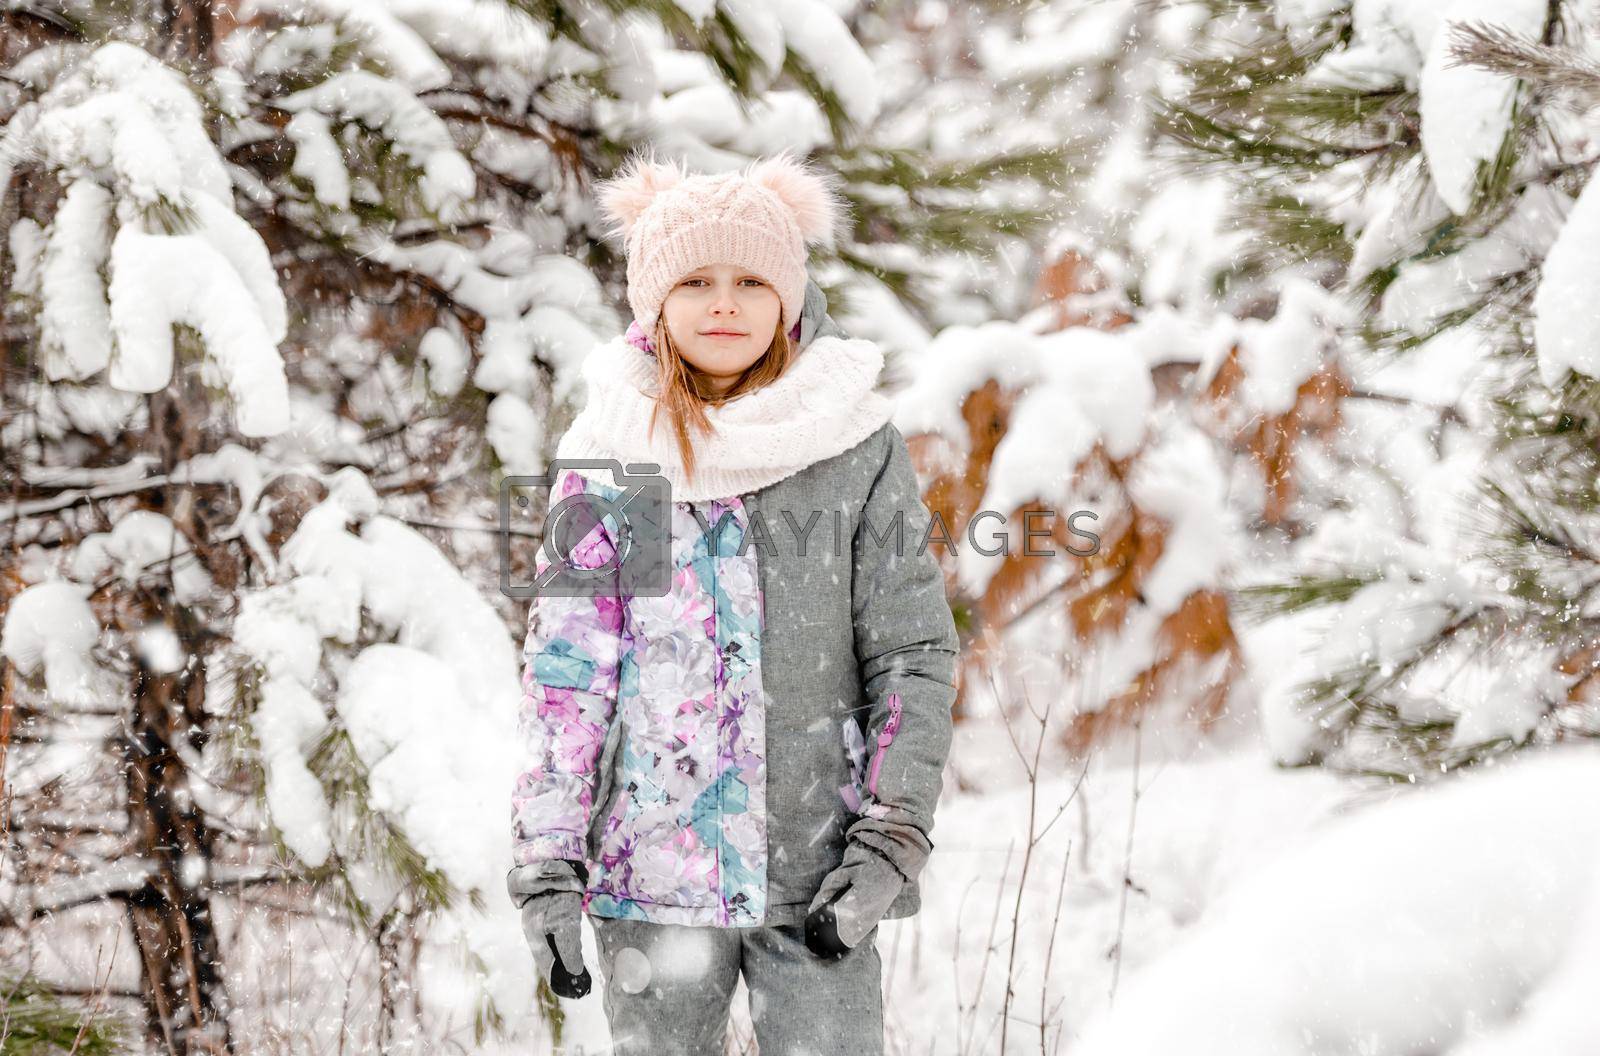 Royalty free image of Preteen girl in winter by tan4ikk1